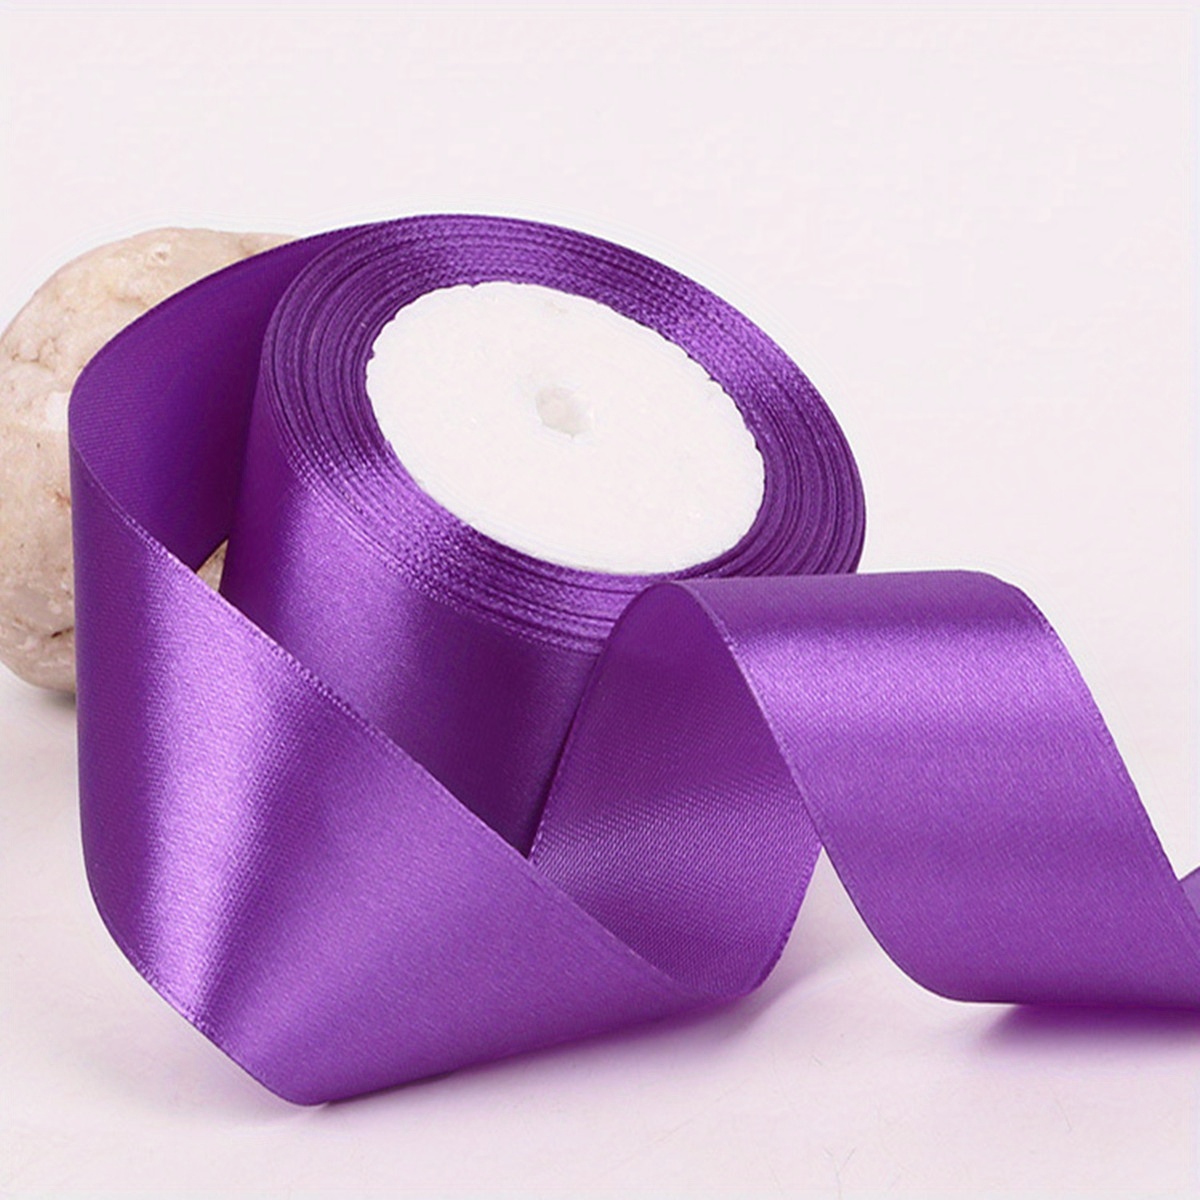  Ribbon Roll (1 inch x 25 Yards), Purple, Light Purple